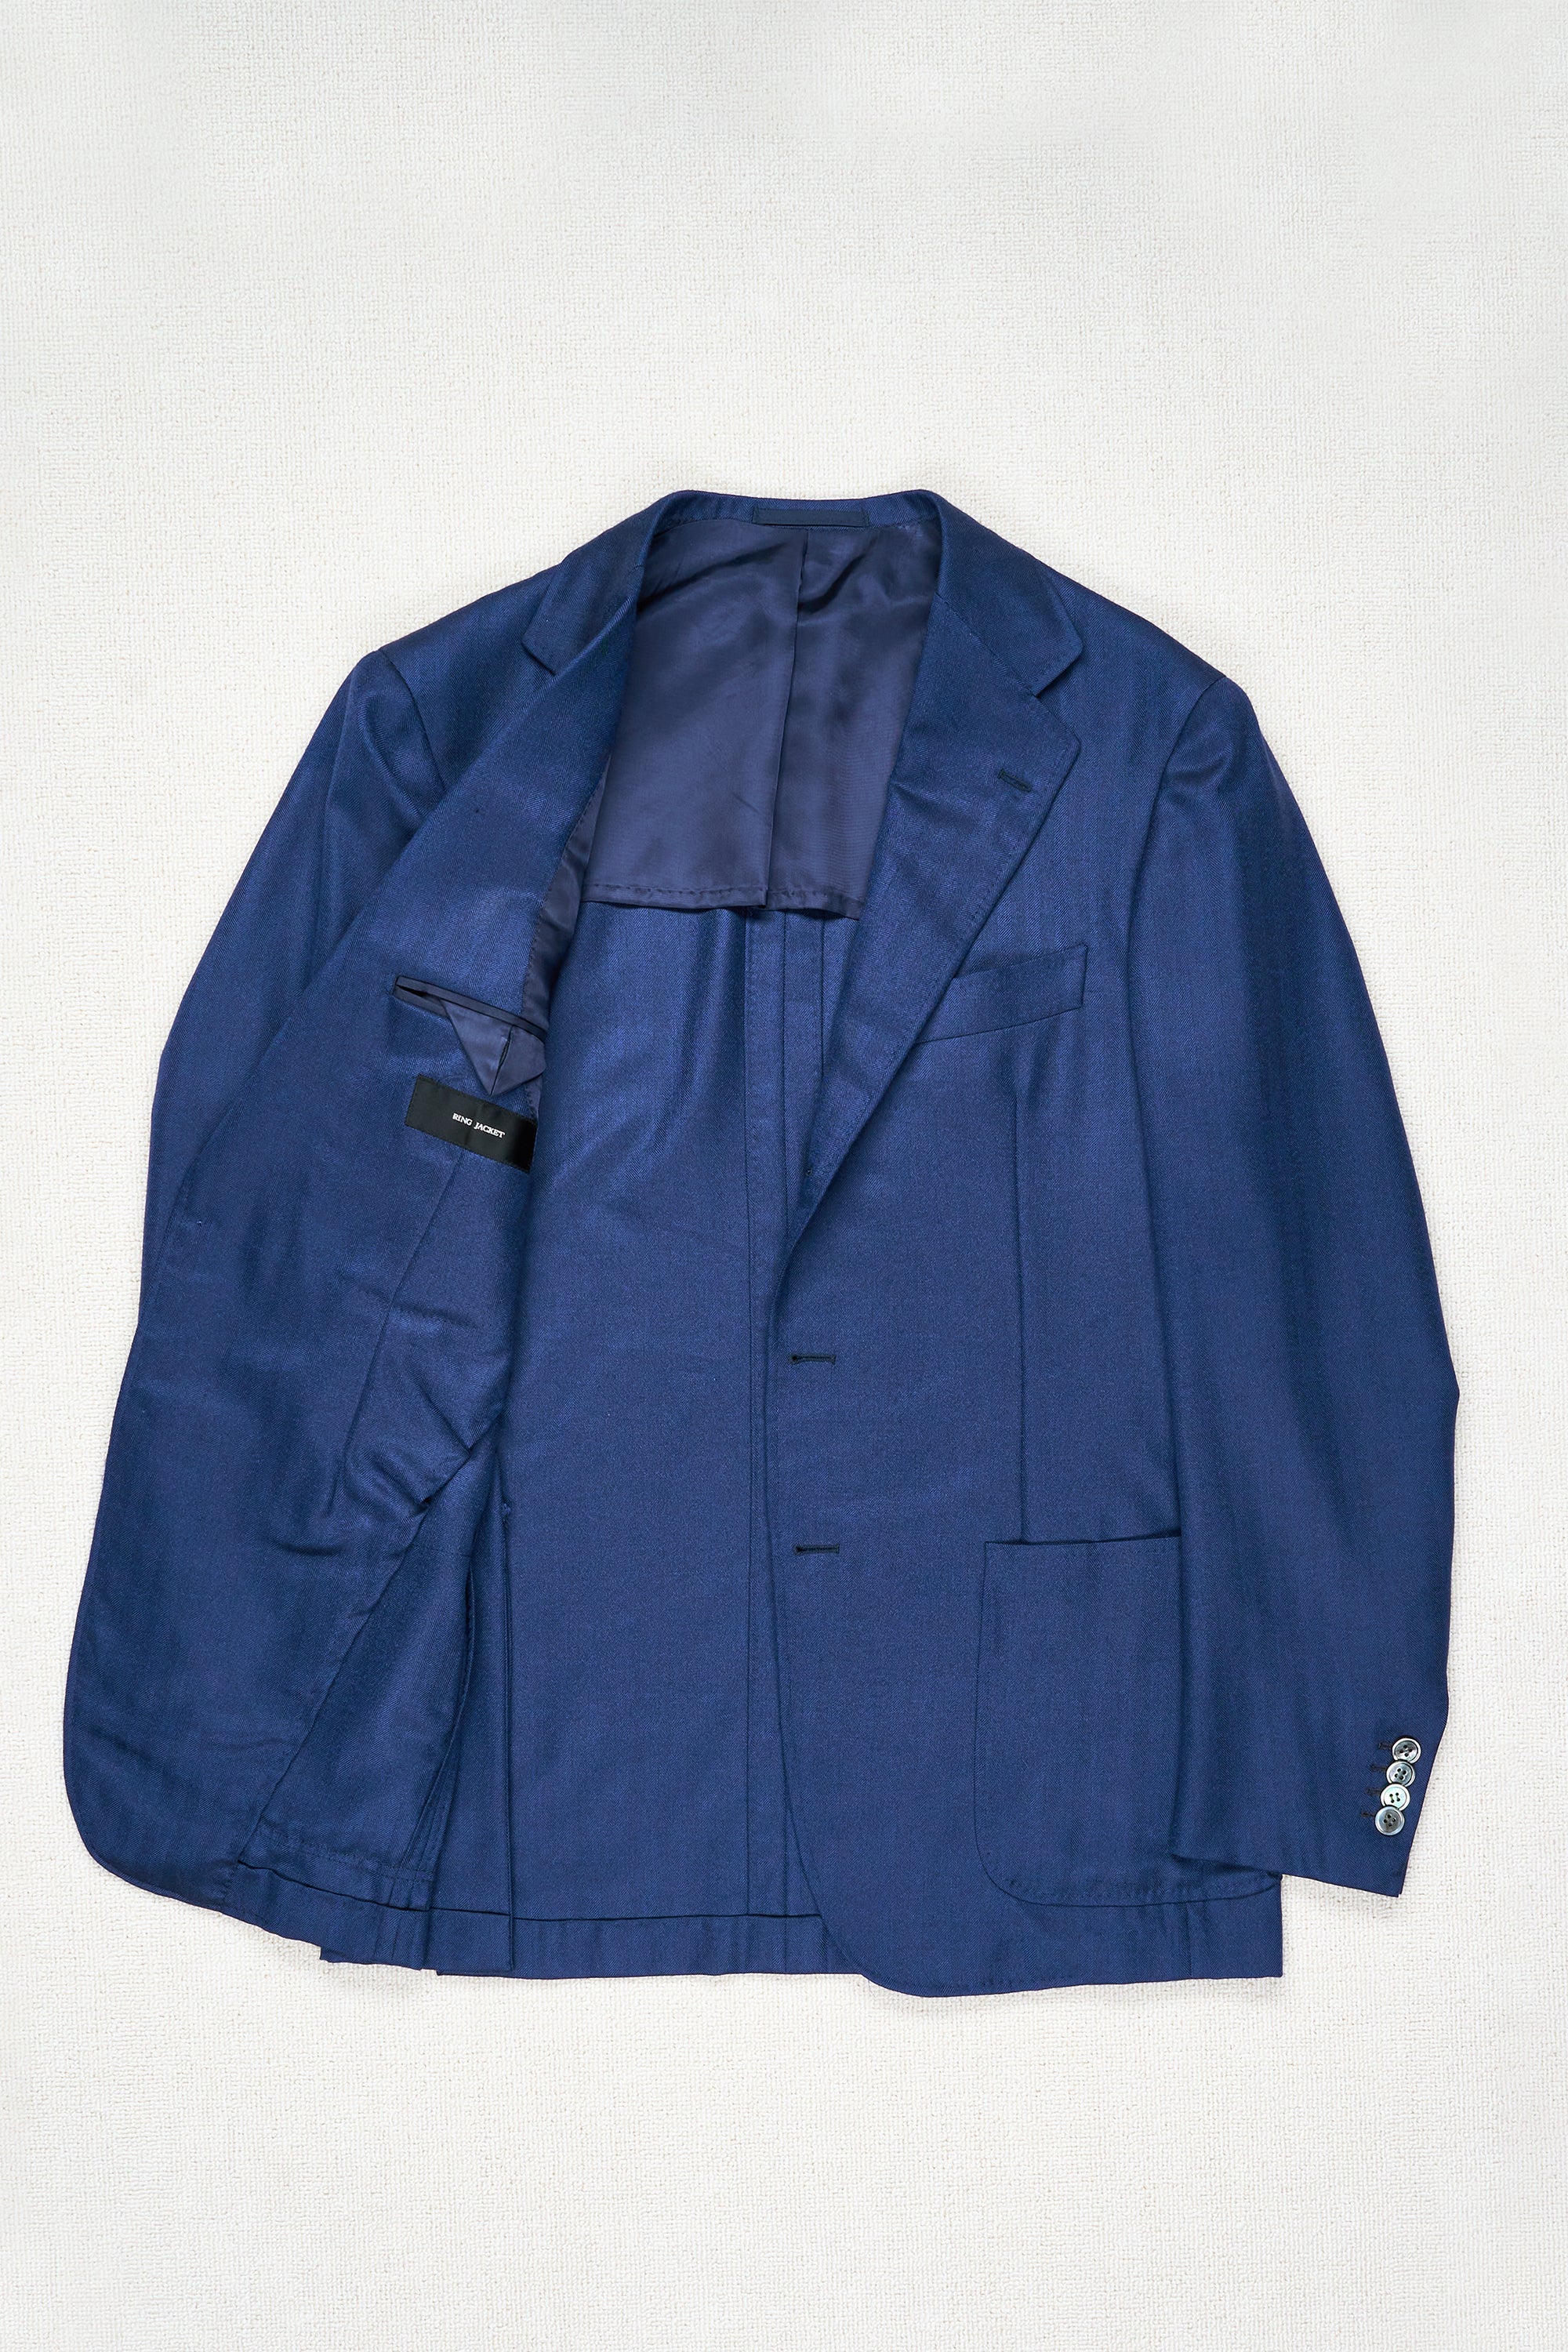 Ring Jacket AMJ03 Blue Cashmere/Silk Herringbone Sport Coat